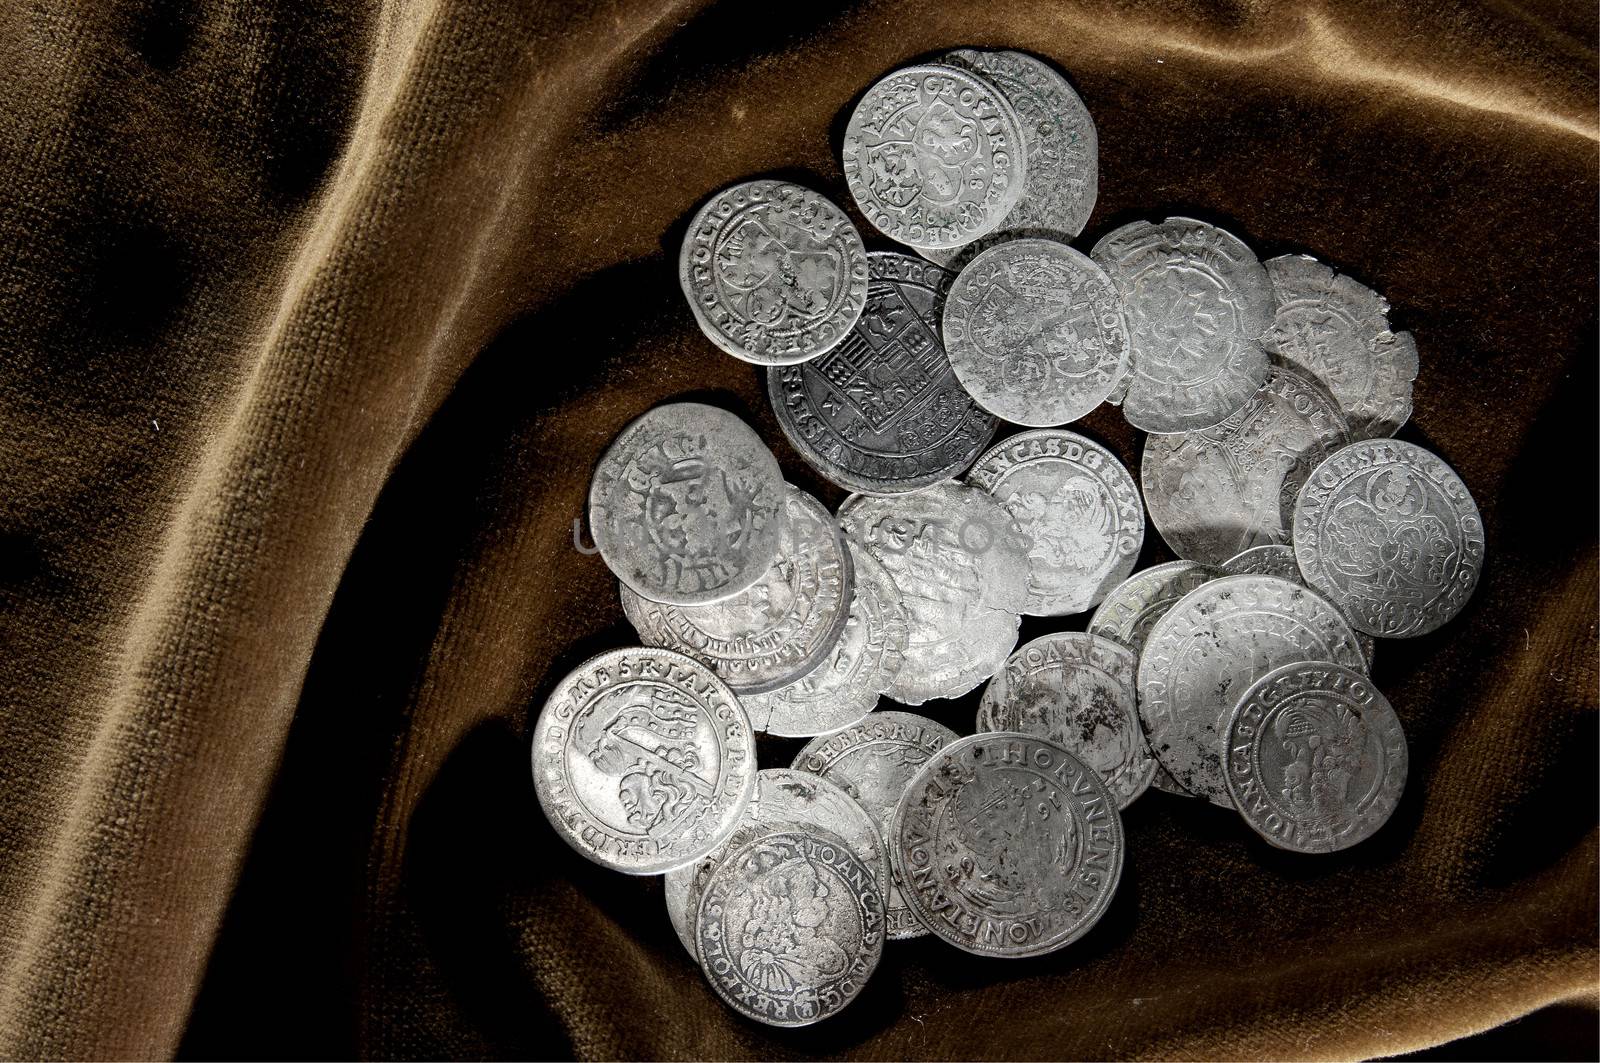  silver coin by sibrikov